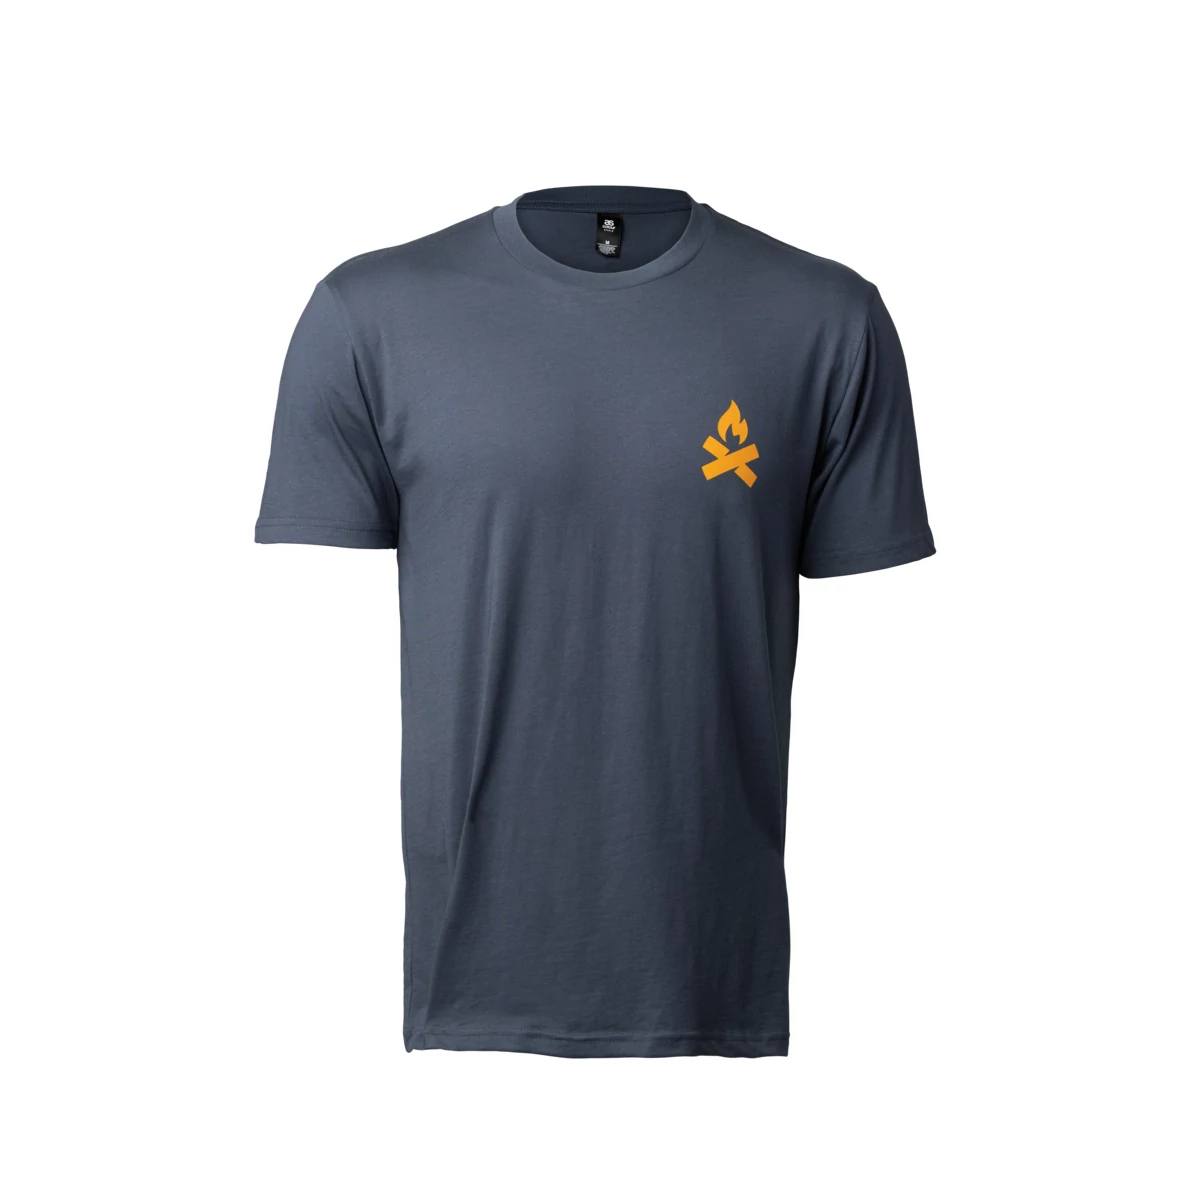 Camp Chef Blue Campsite T-Shirt - L